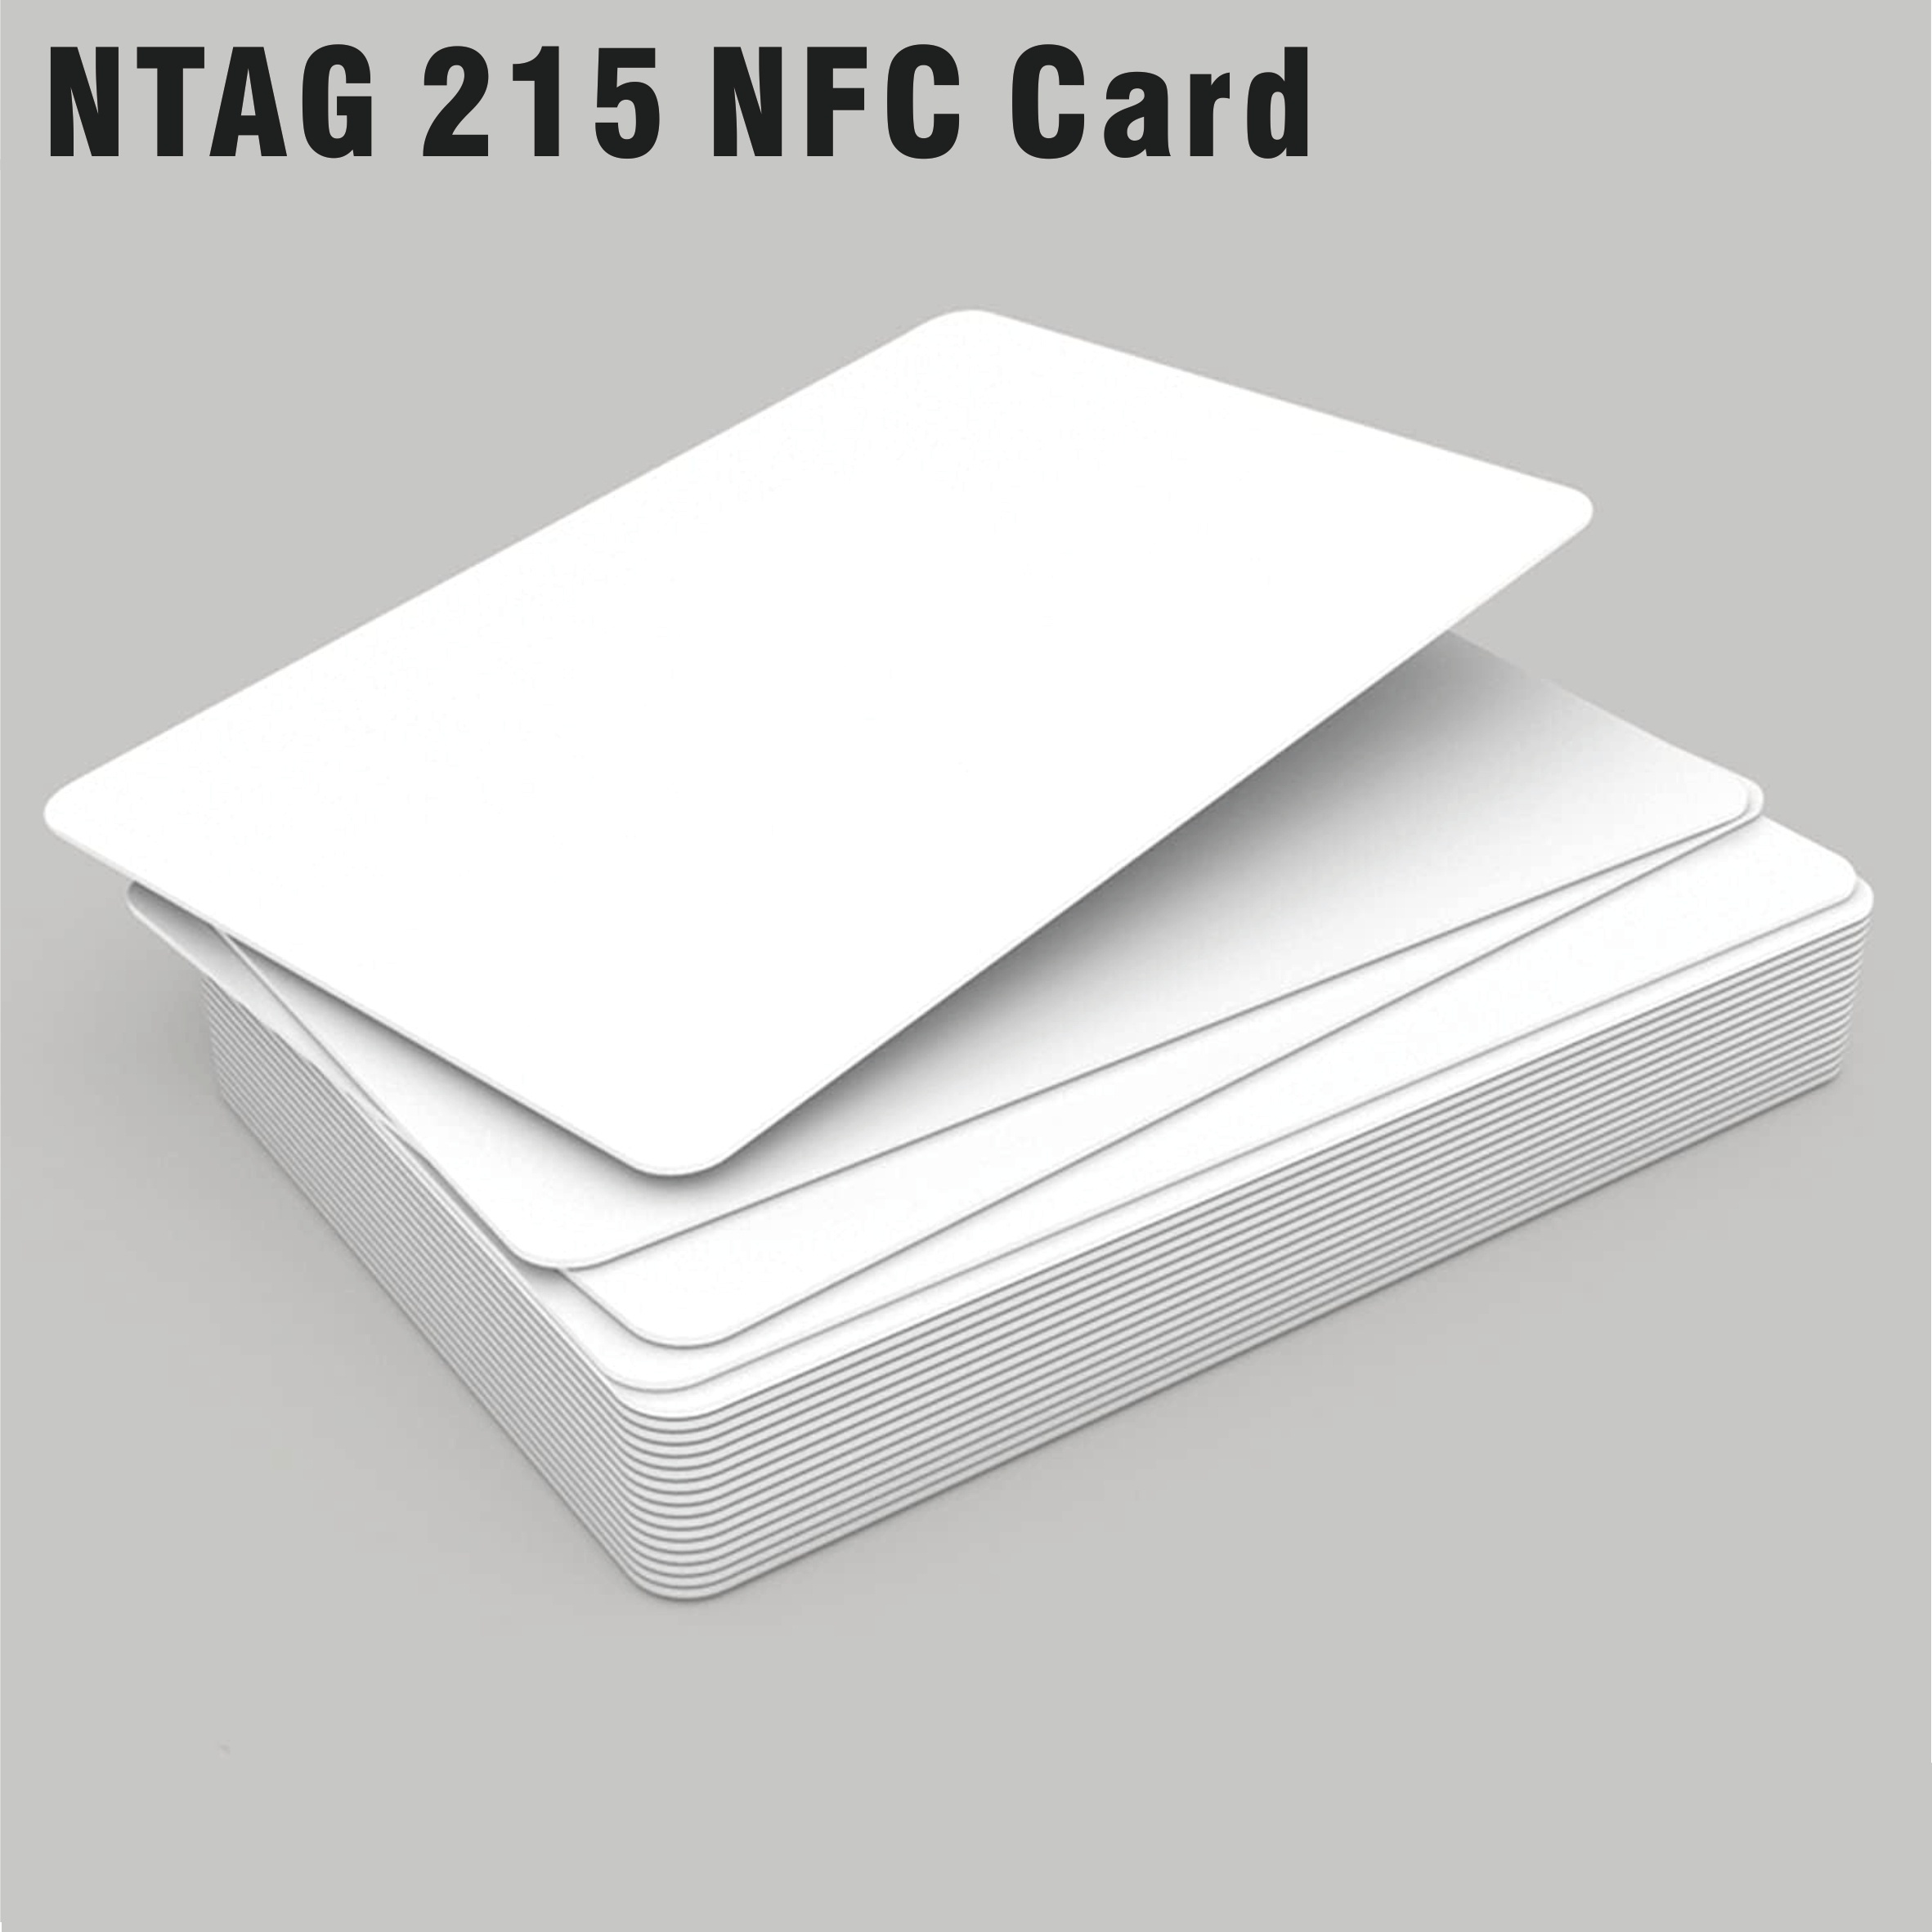 100 Pcs Tarjetas NFC en blanco 215 Tarjetas NFC 215 Etiquetas Tarjetas Nfc  regrabables 504 bytes de memoria para todas las NFC ES